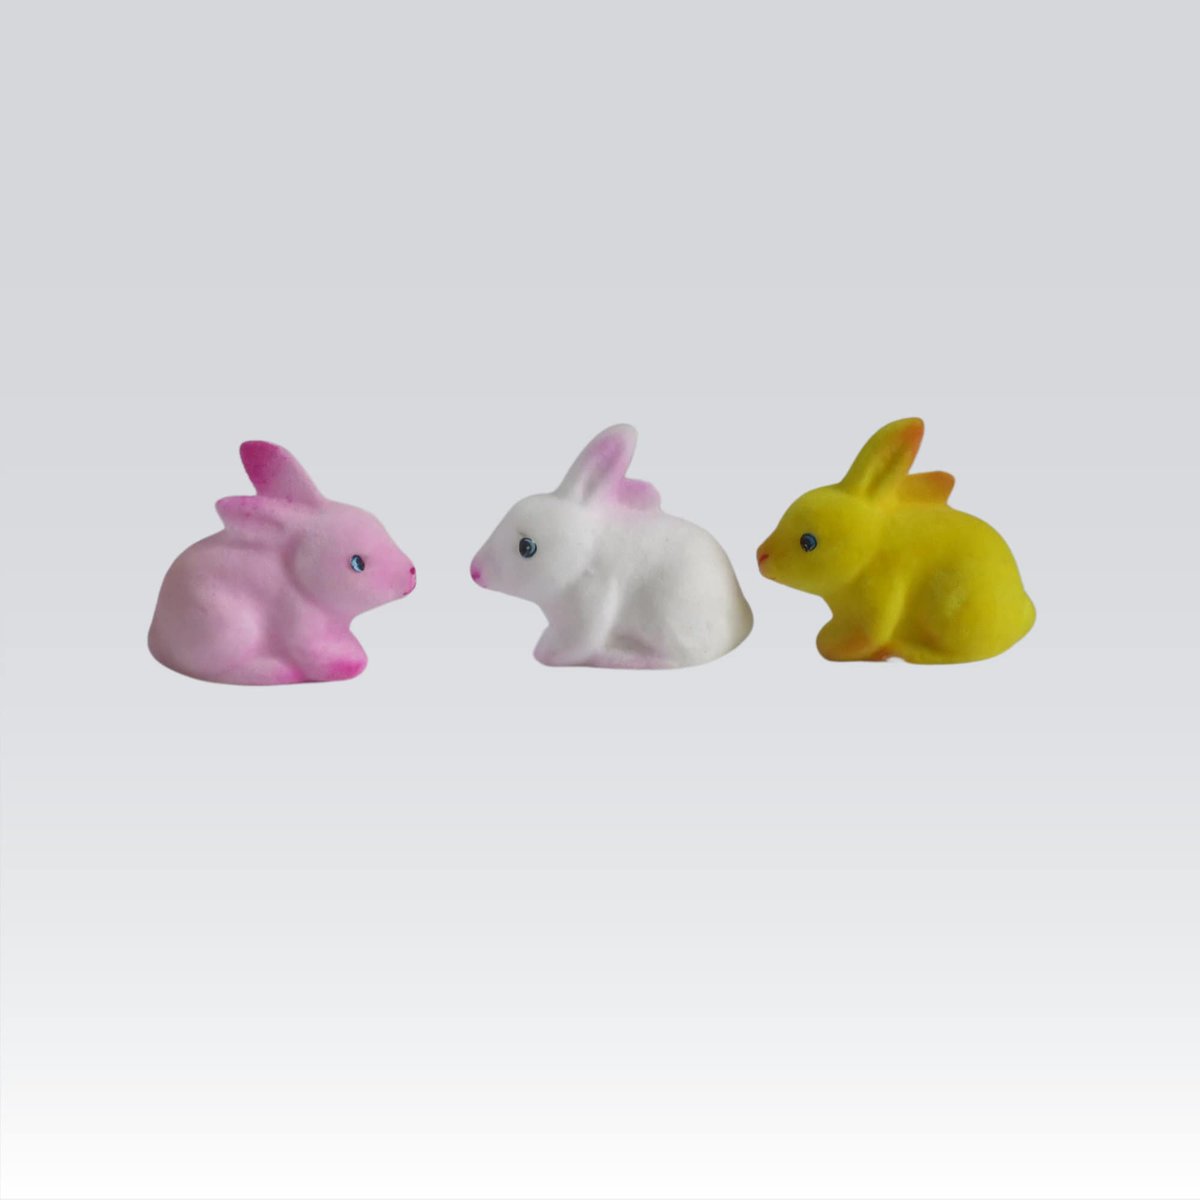 Mini Flocked Bunnies 1.75 inch Rabbit Figures Set of 3 tuppu.net/a4530863 #Etsyteamunity #SwirlingOrange11 #SMILEtt23 #VintageFun